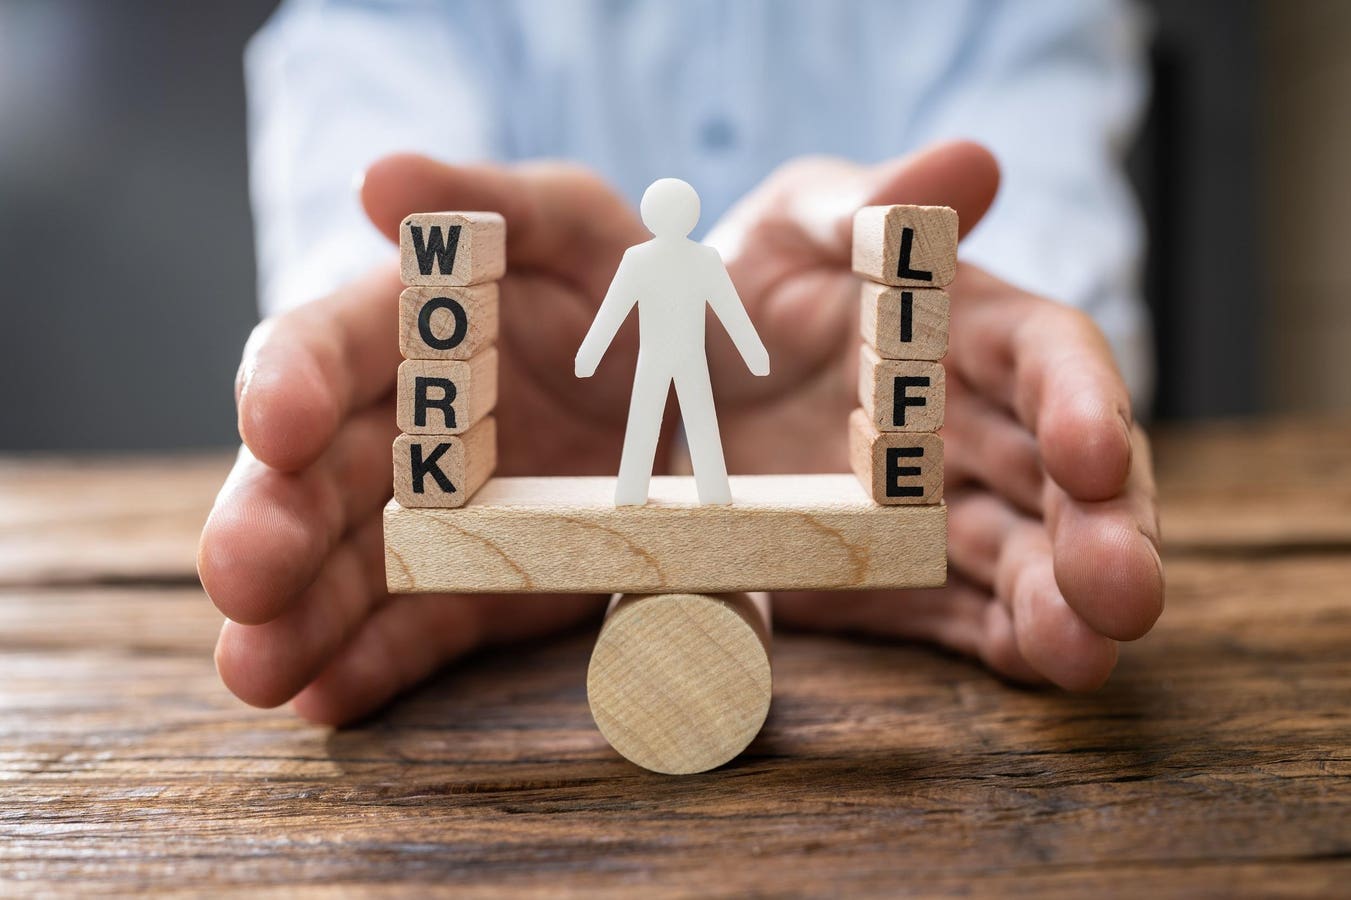 Maintaining a Work-Life Balance